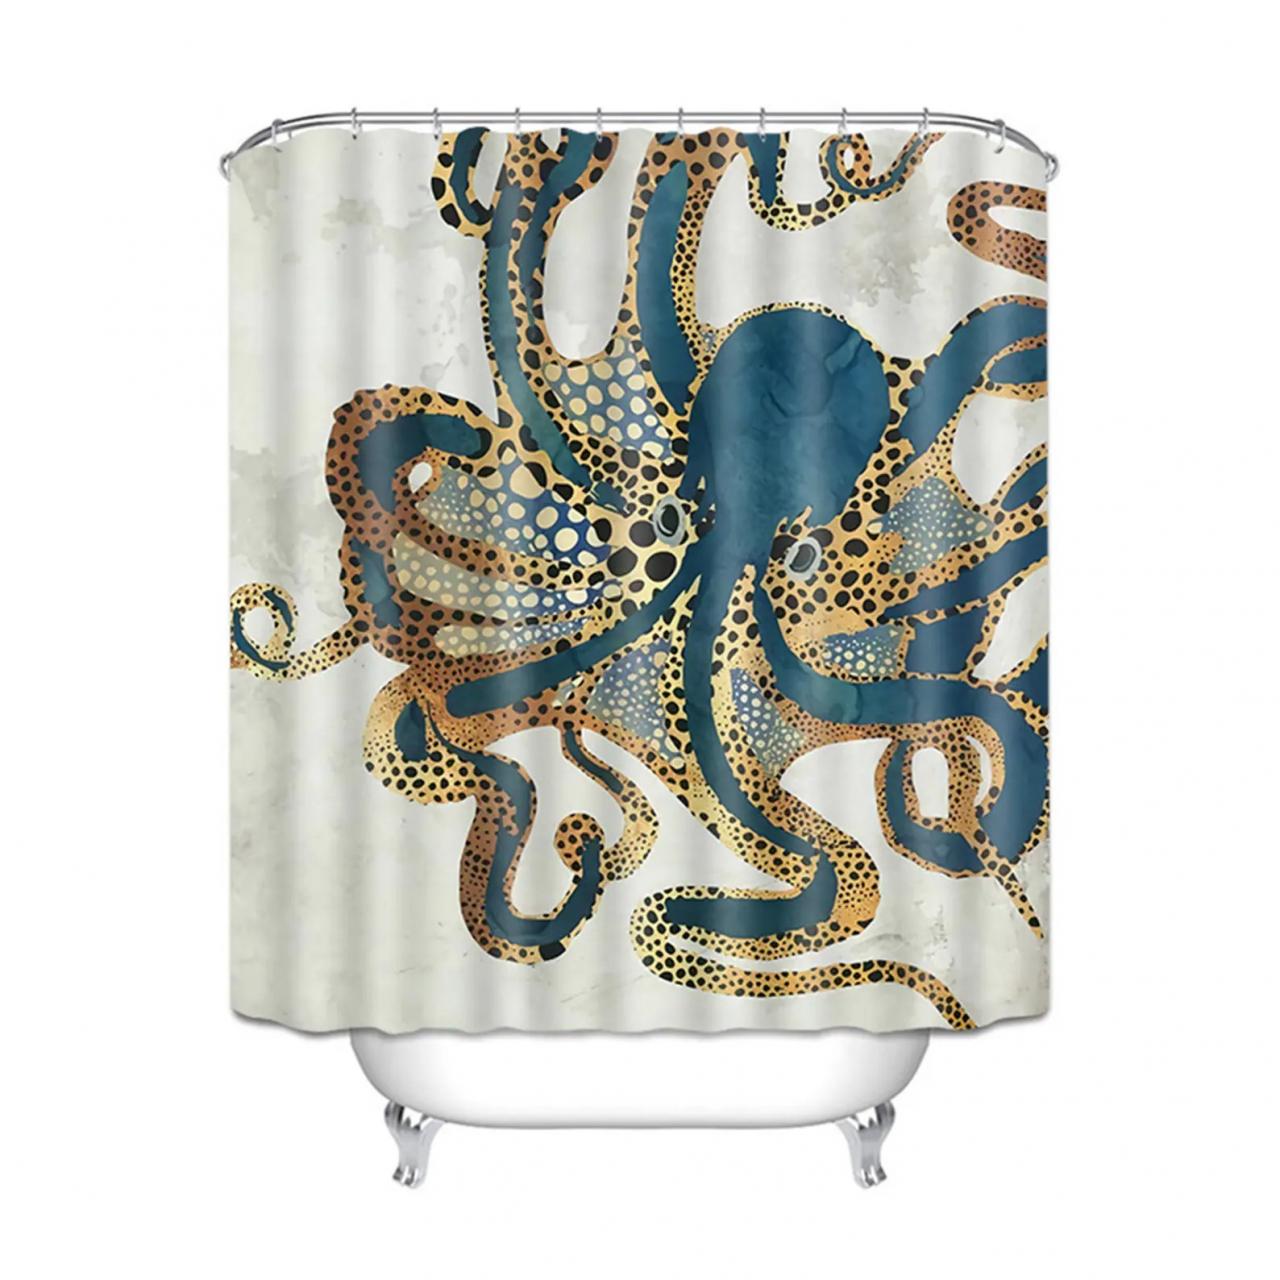 Octopus Shower Curtain Octopus Bathroom Decor Bathroom Etsy